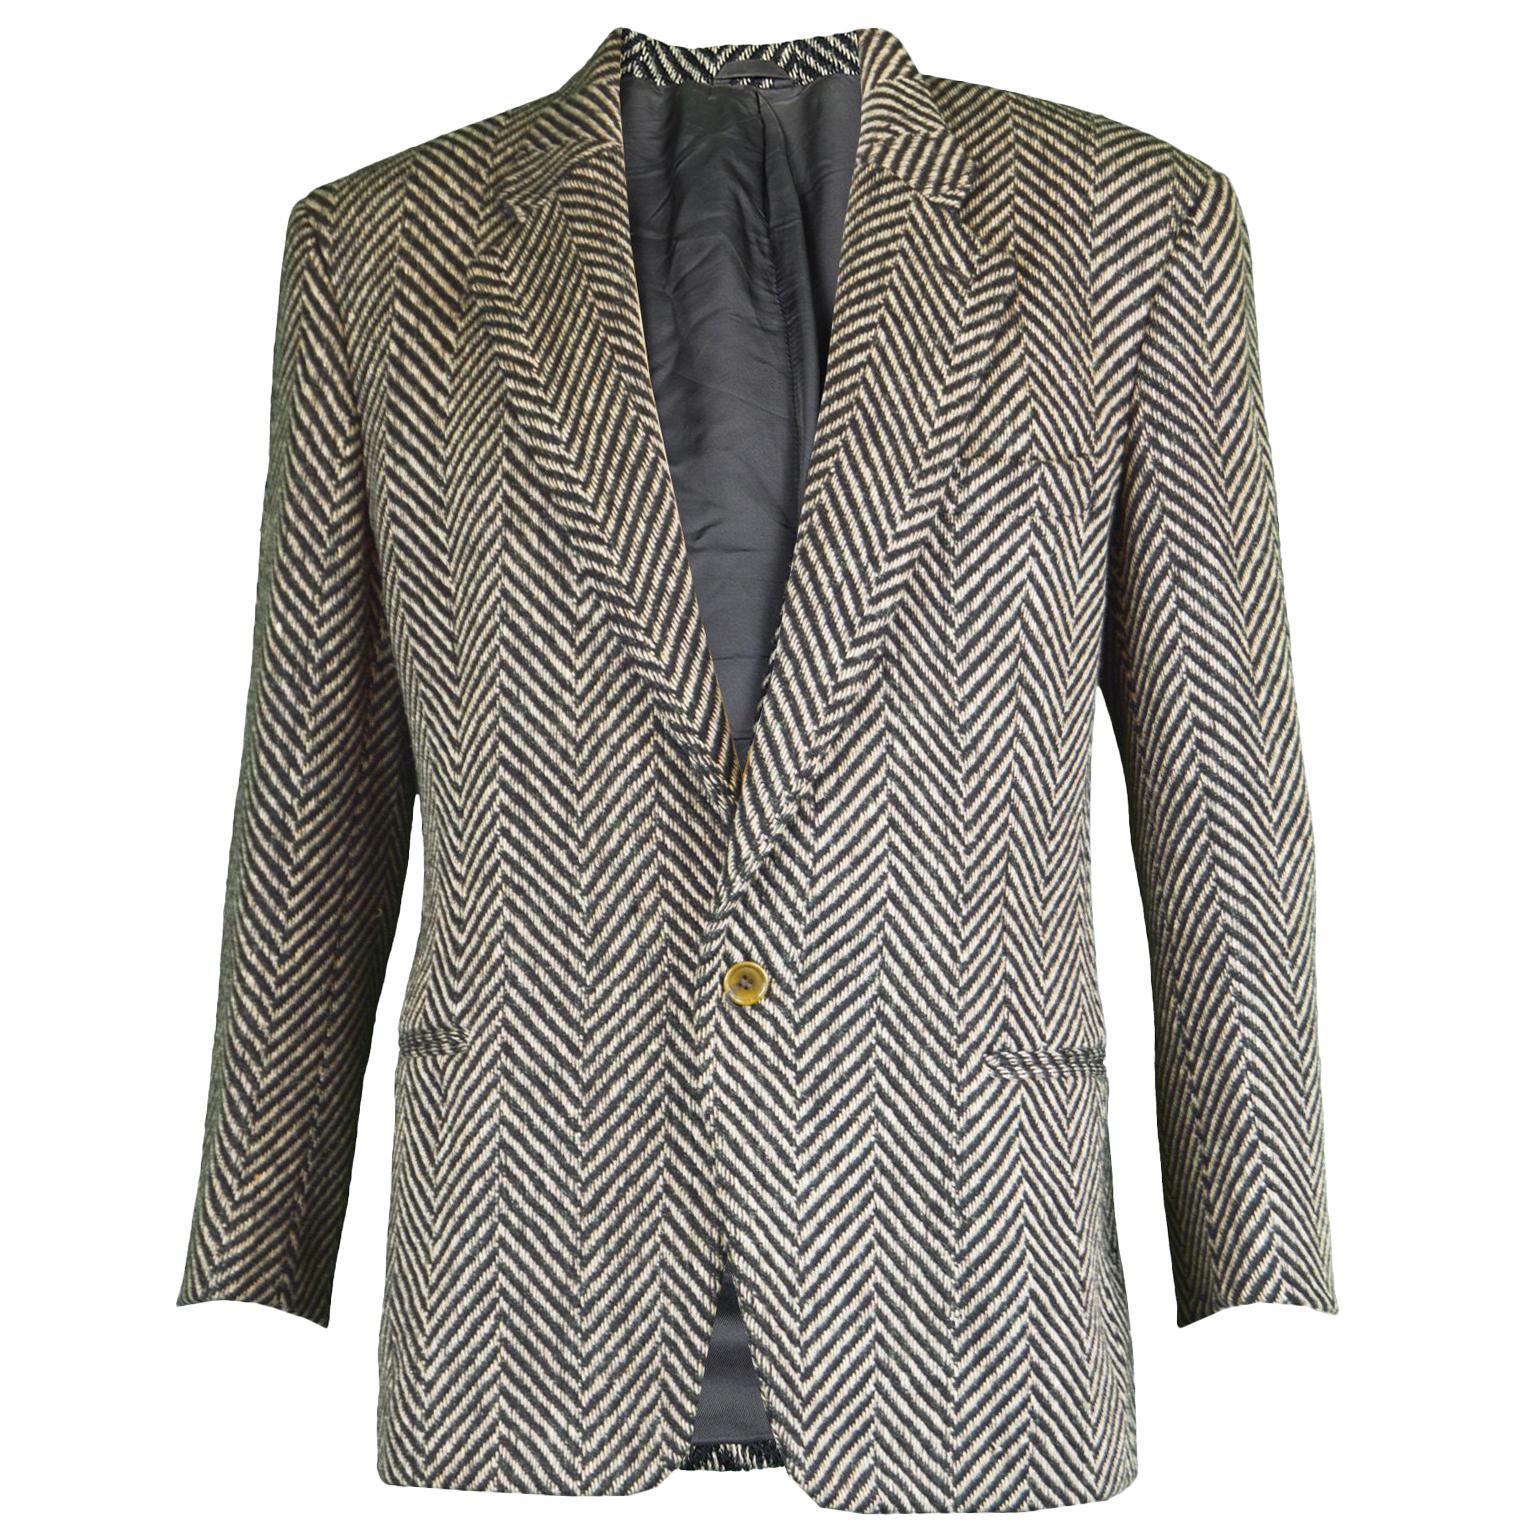 Giorgio Armani Men's Vintage Wool Herringbone Sport Coat Blazer Jacket, c. 1980s